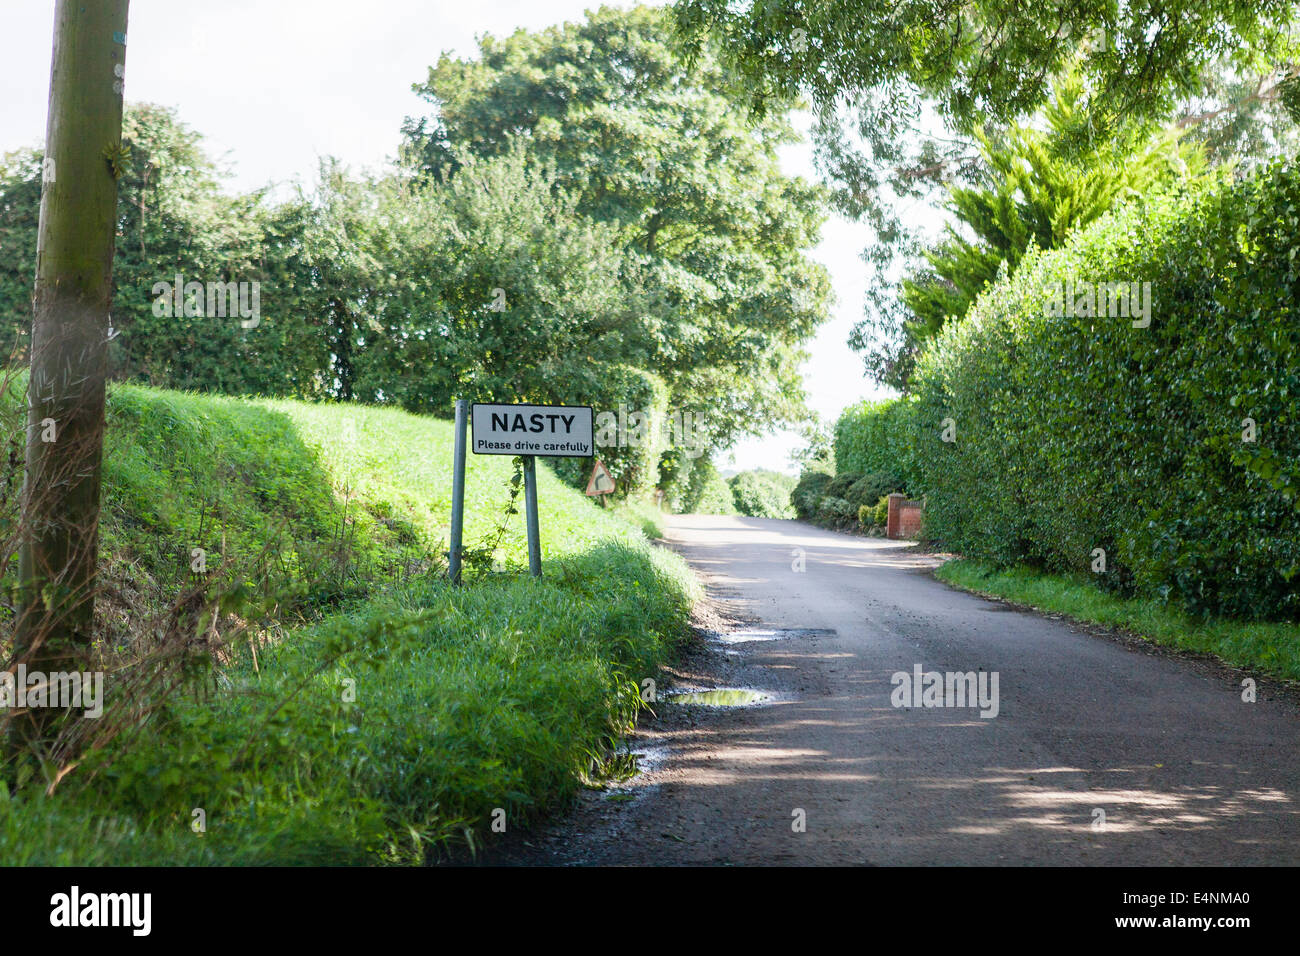 Road sign for Nasty, Hertfordshire Stock Photo